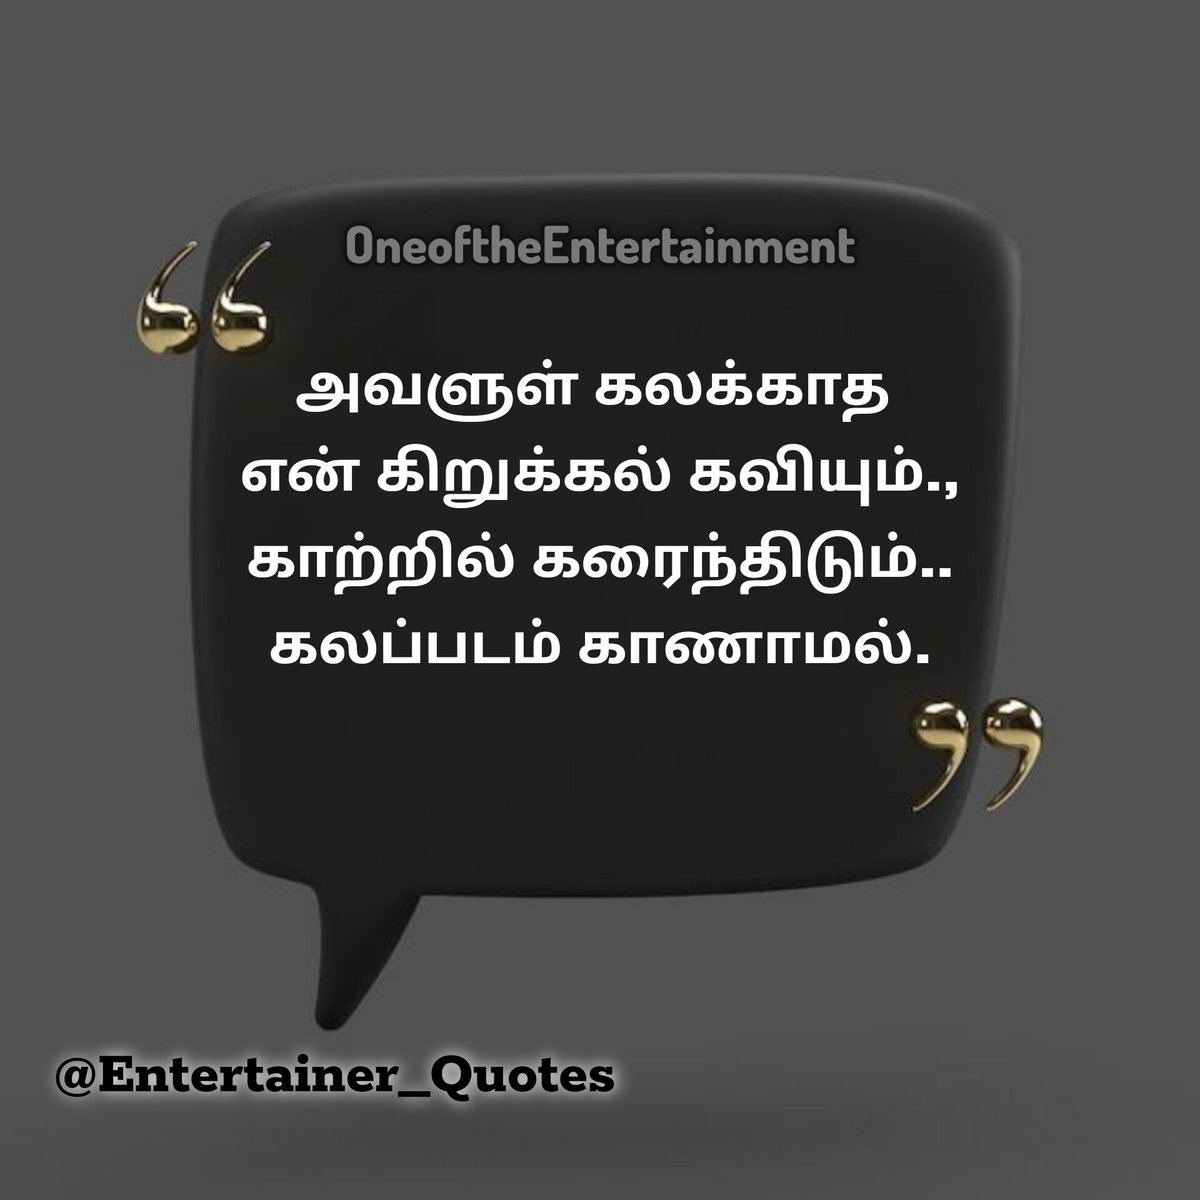 .,✍️🍃✍️,.#tamilquotes #tamilactors #Tamilactress #TamilNaduDay #TamilNadu #Tamil #TamilCinema #TamilNews #Kollywood #oneoftheentertainment #entertainer_quotes #kavithai #kavidhai #KaadhalTapes #LeoDisasterMeet #LeoSuccessMeet #Leo #Rajini #Rajinikanth𓃵